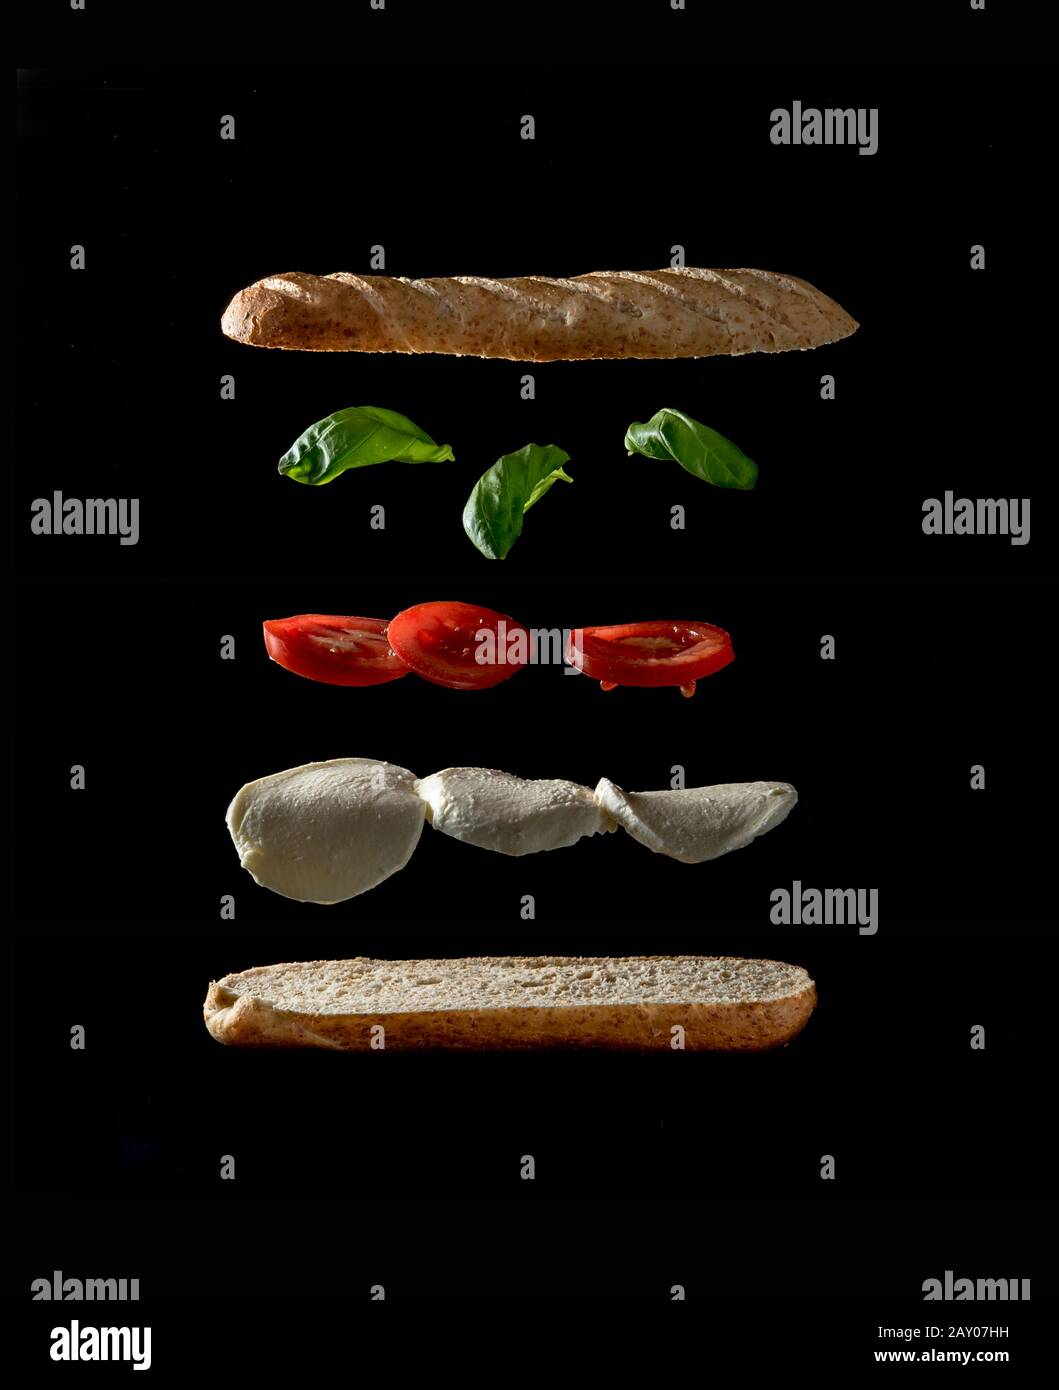 levitating ingredients of a tasty veggie sandwich on black background Stock Photo